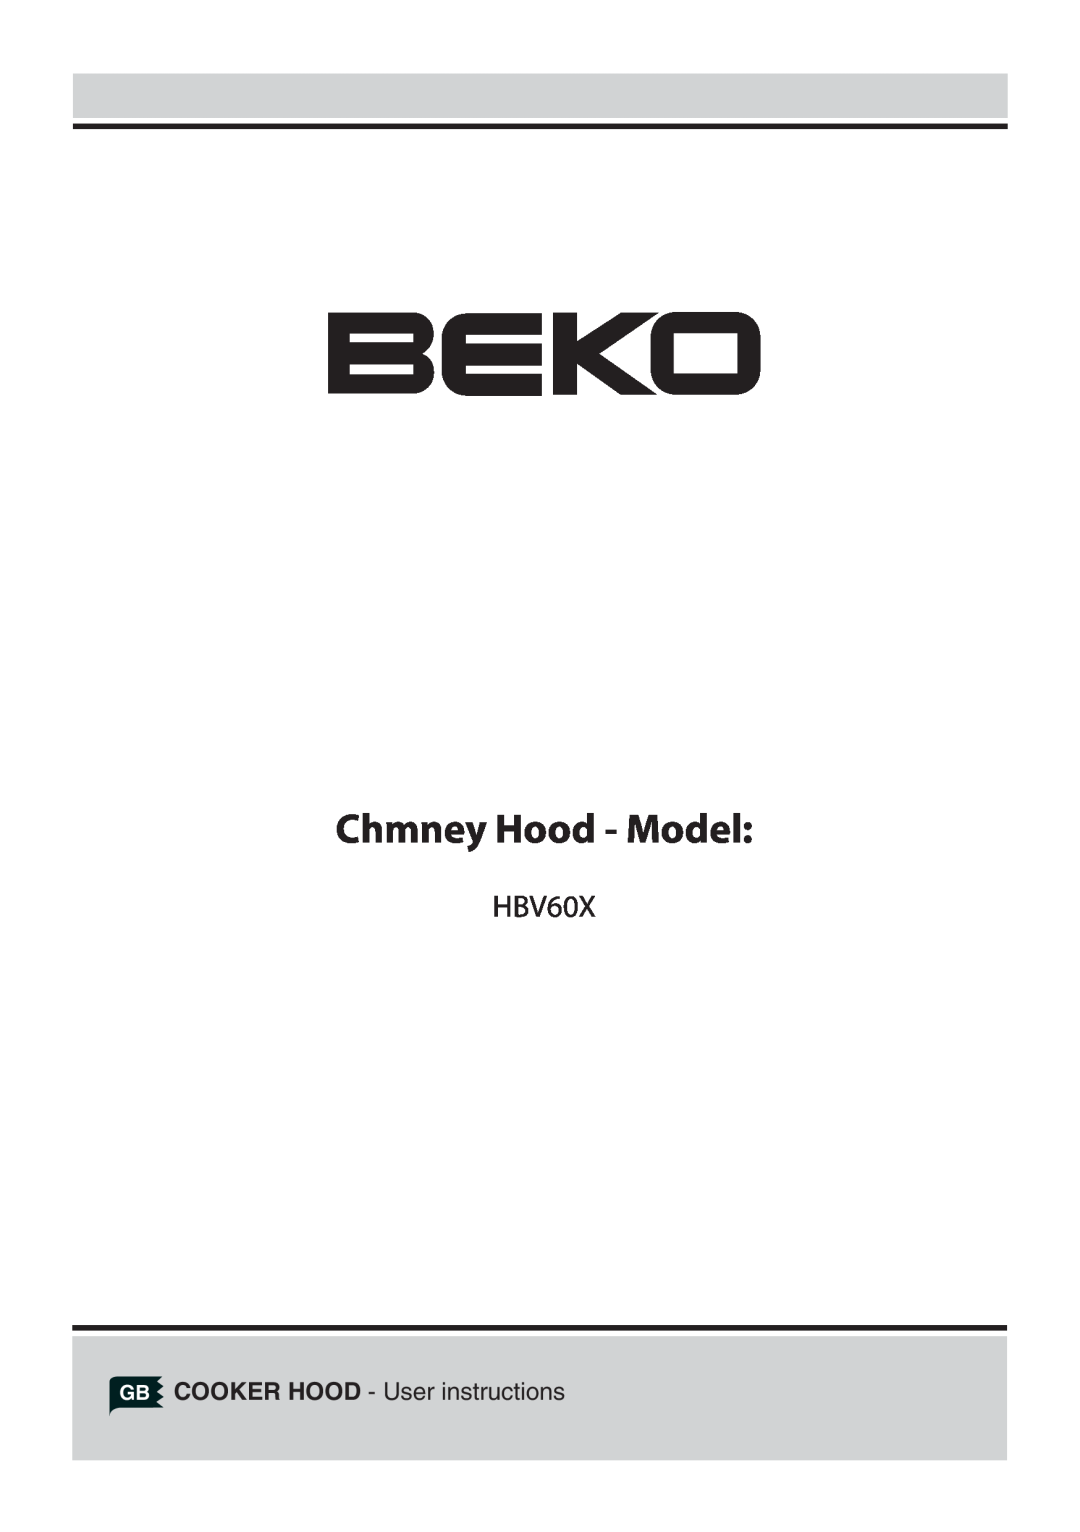 Beko HBV60X manual Chimney Hood - Model, GB COOKER HOOD - User instructions 